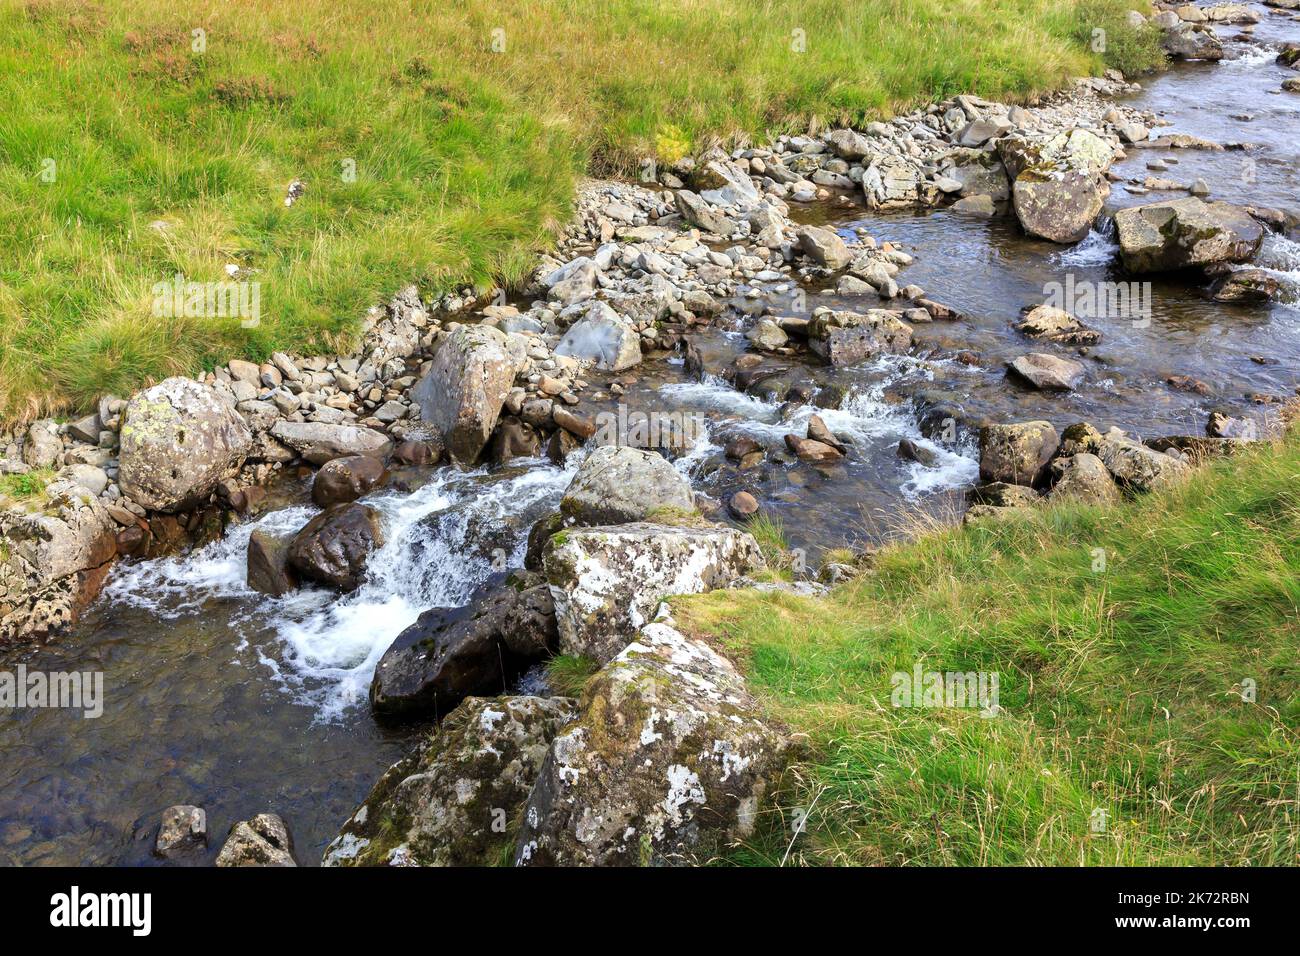 Water tumbling over rocks in a Scottish burn Stock Photo